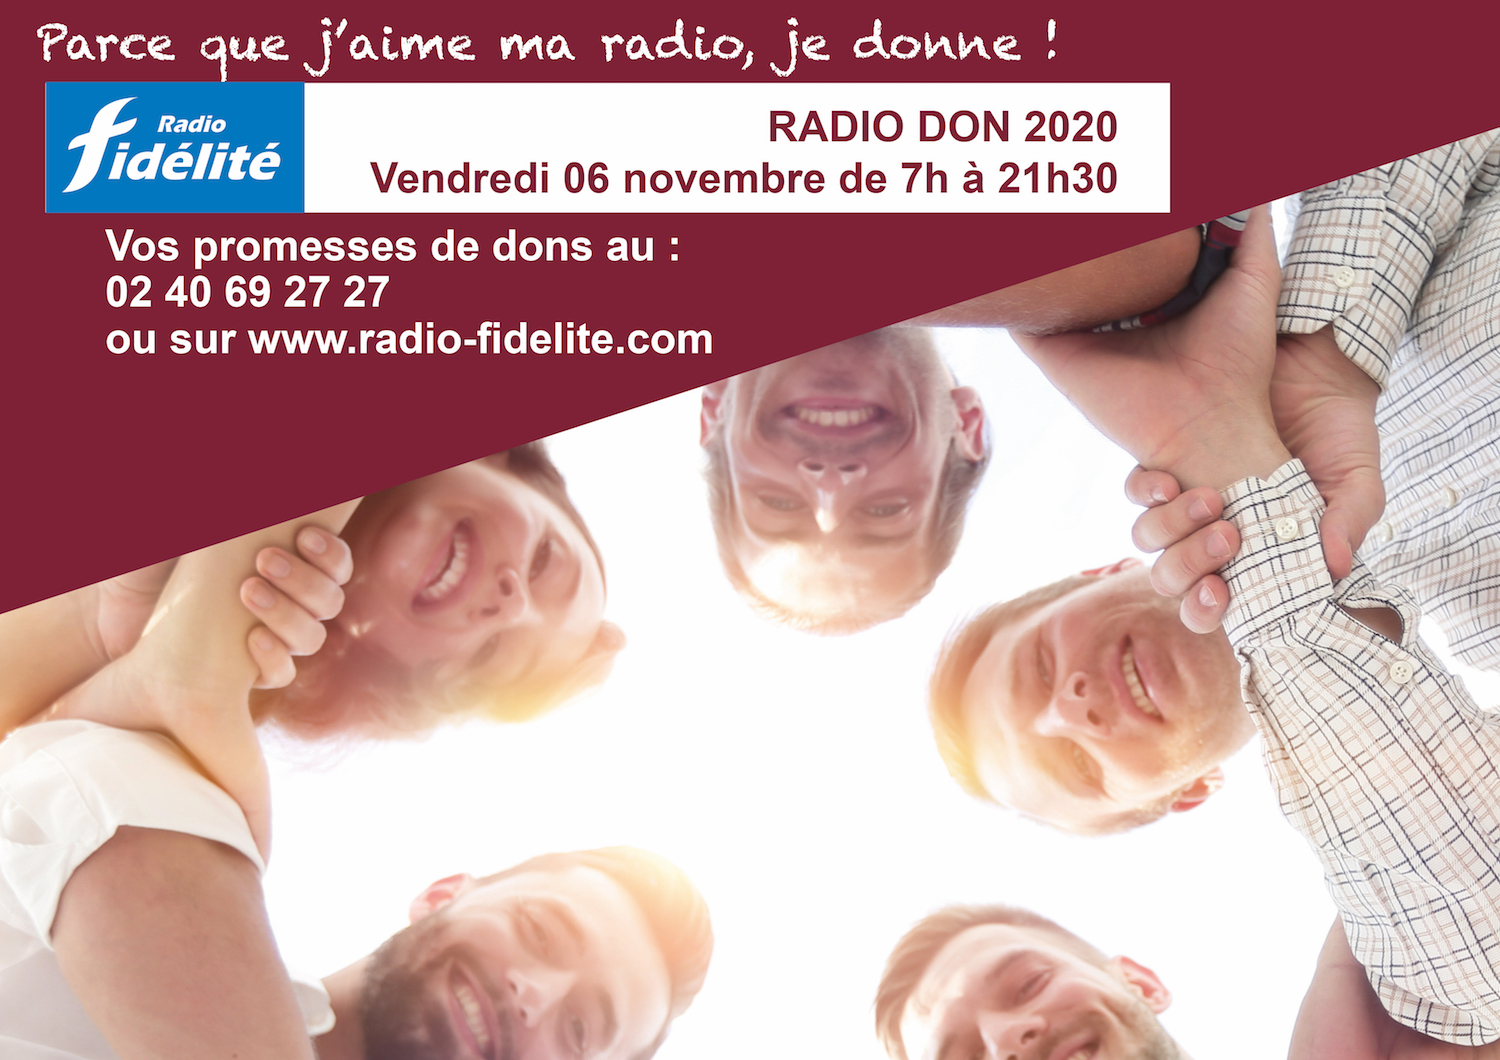 Radio Fidélité organise son 12e RadioDon